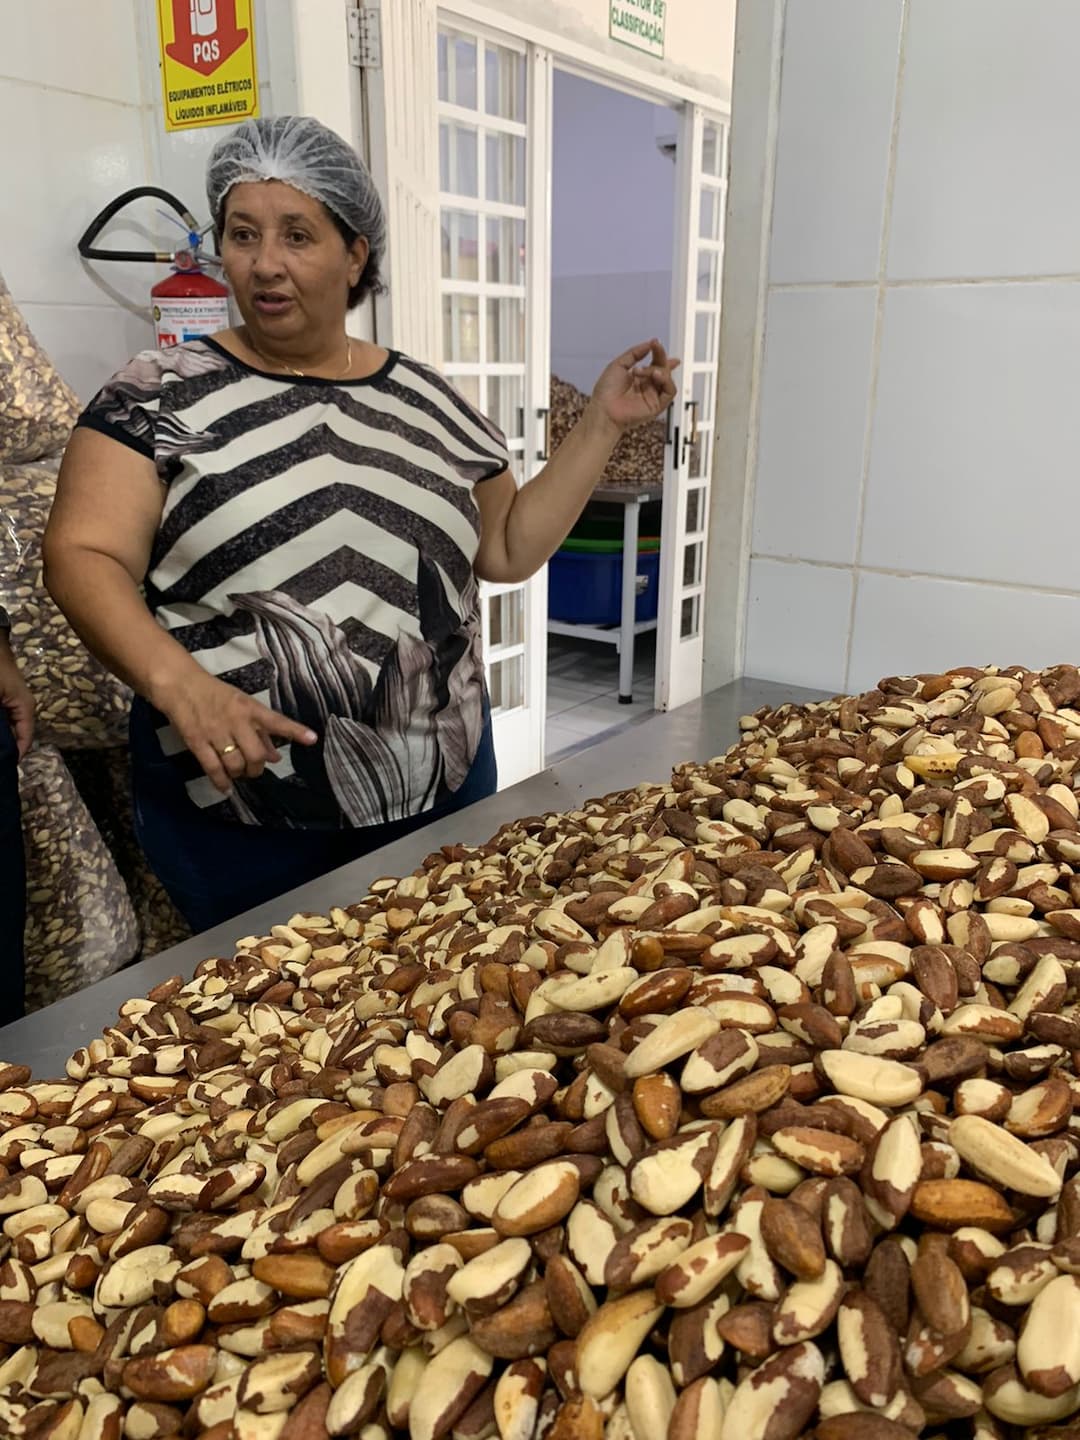 Brazil Nuts 